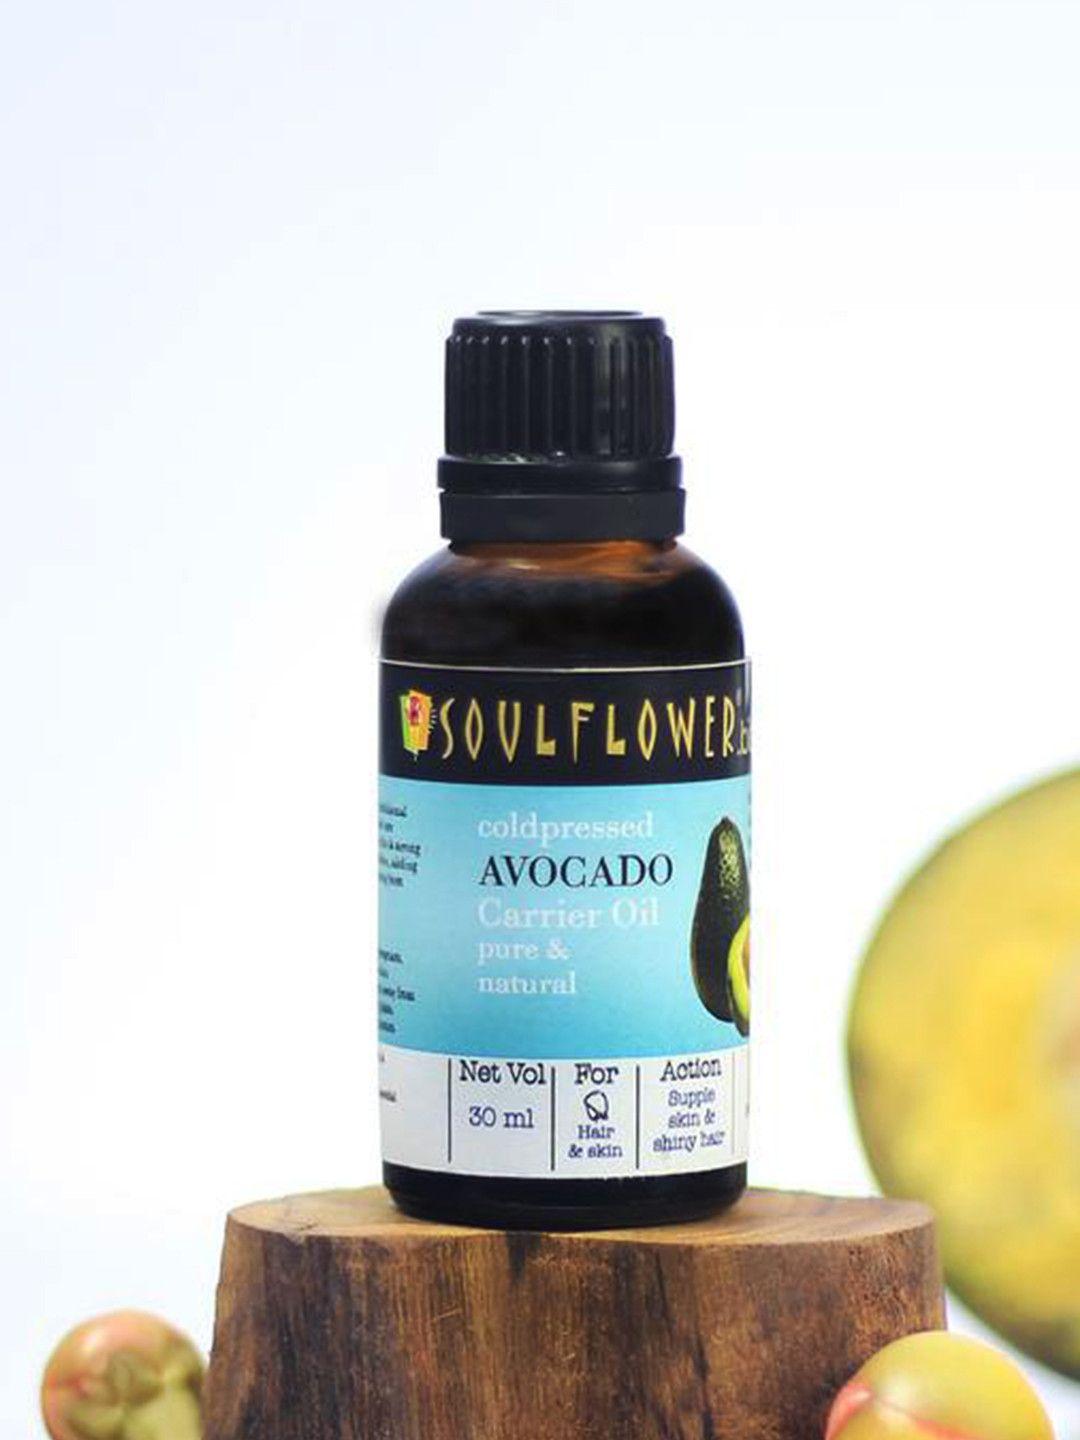 soulflower-cold-pressed-avocado-hair-oil-for-scalp-nourishment-hair-fall-&-skin-30ml